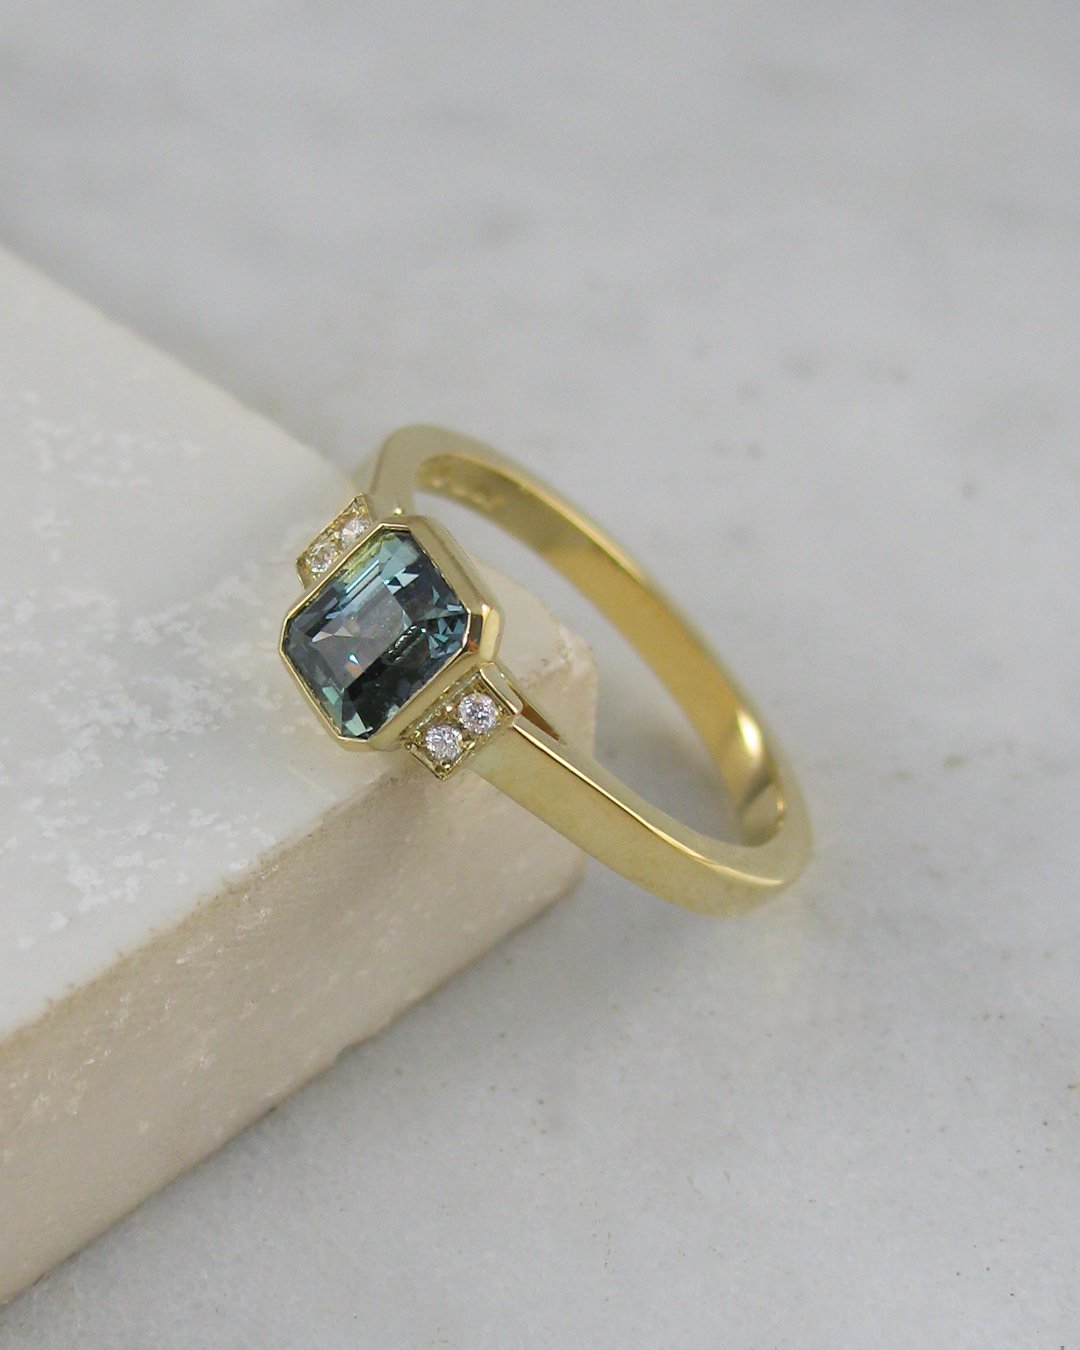 A stunning octagonal step cut natural teal blue sapphire engagement ring